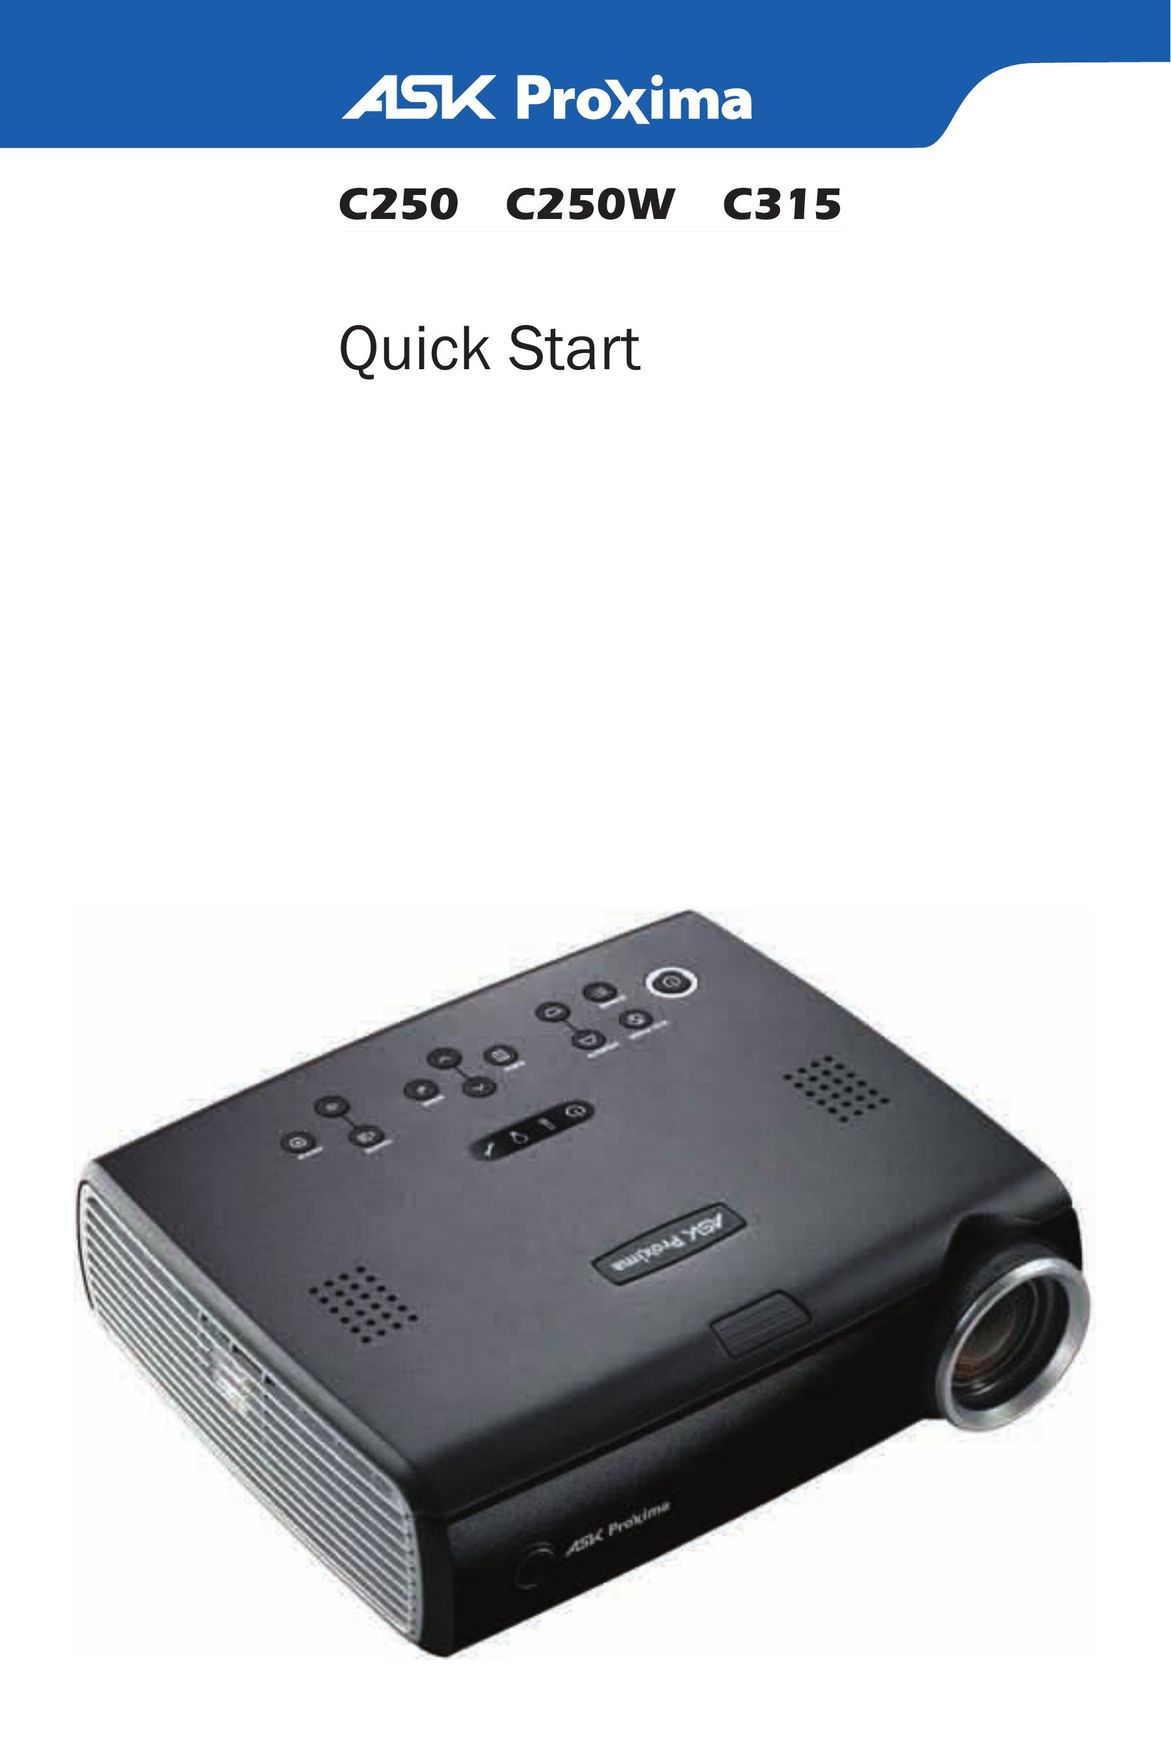 Ask Proxima C250 C250W C315 Projector User Manual